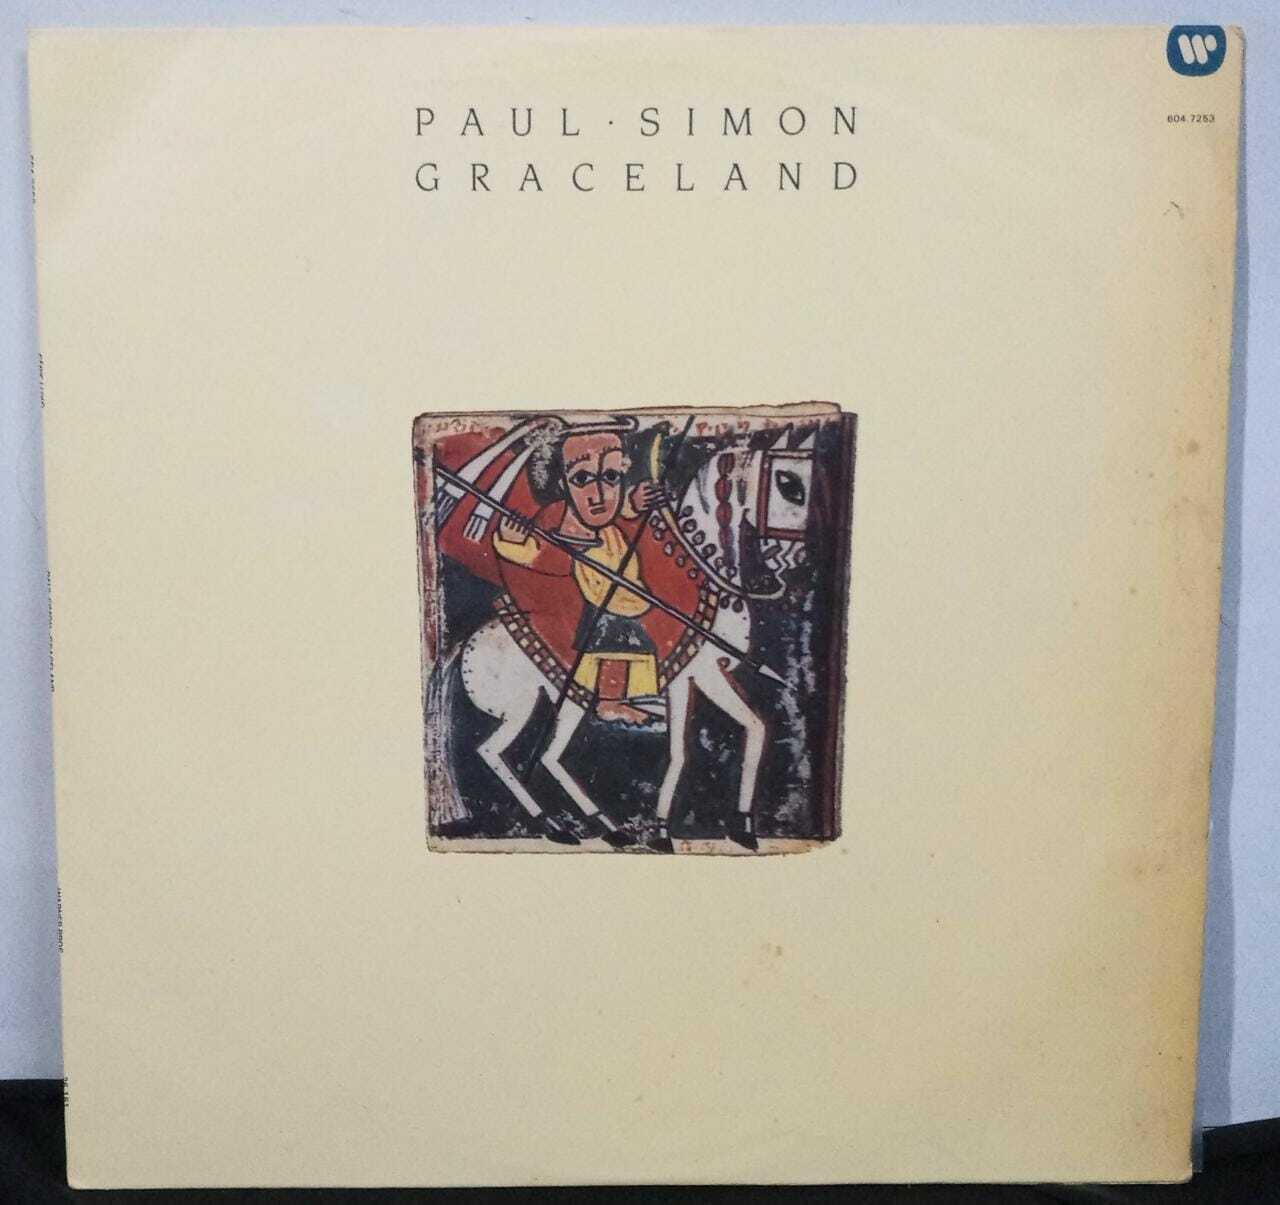 Vinil - Paul Simon - Graceland